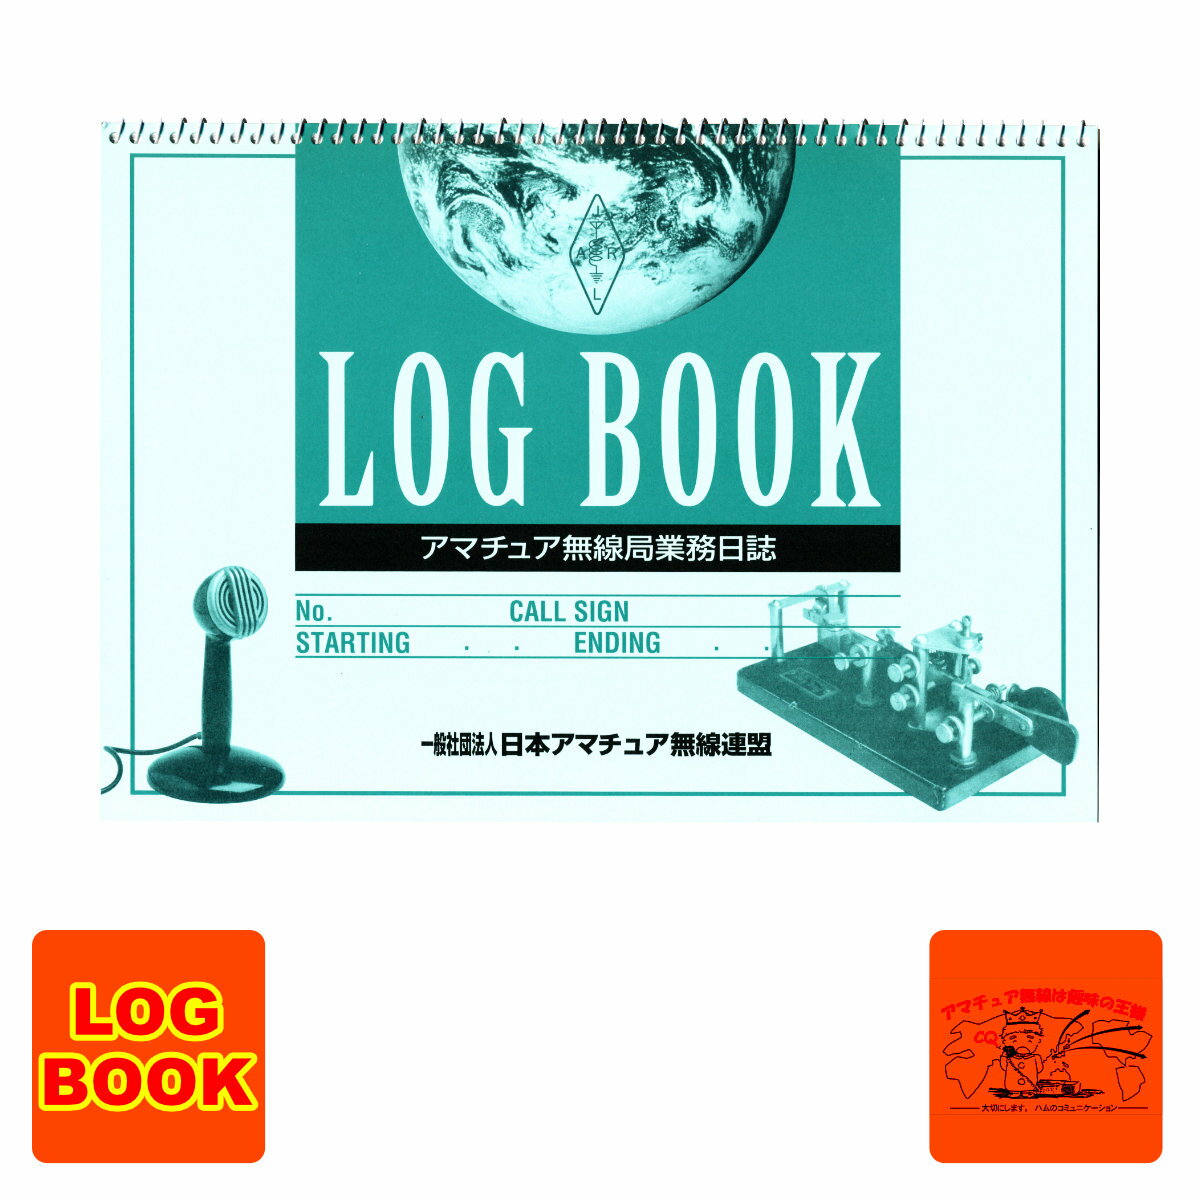 LOG BOOK アマチュア無線局業務日誌 (一社)日本アマチュア無線連盟